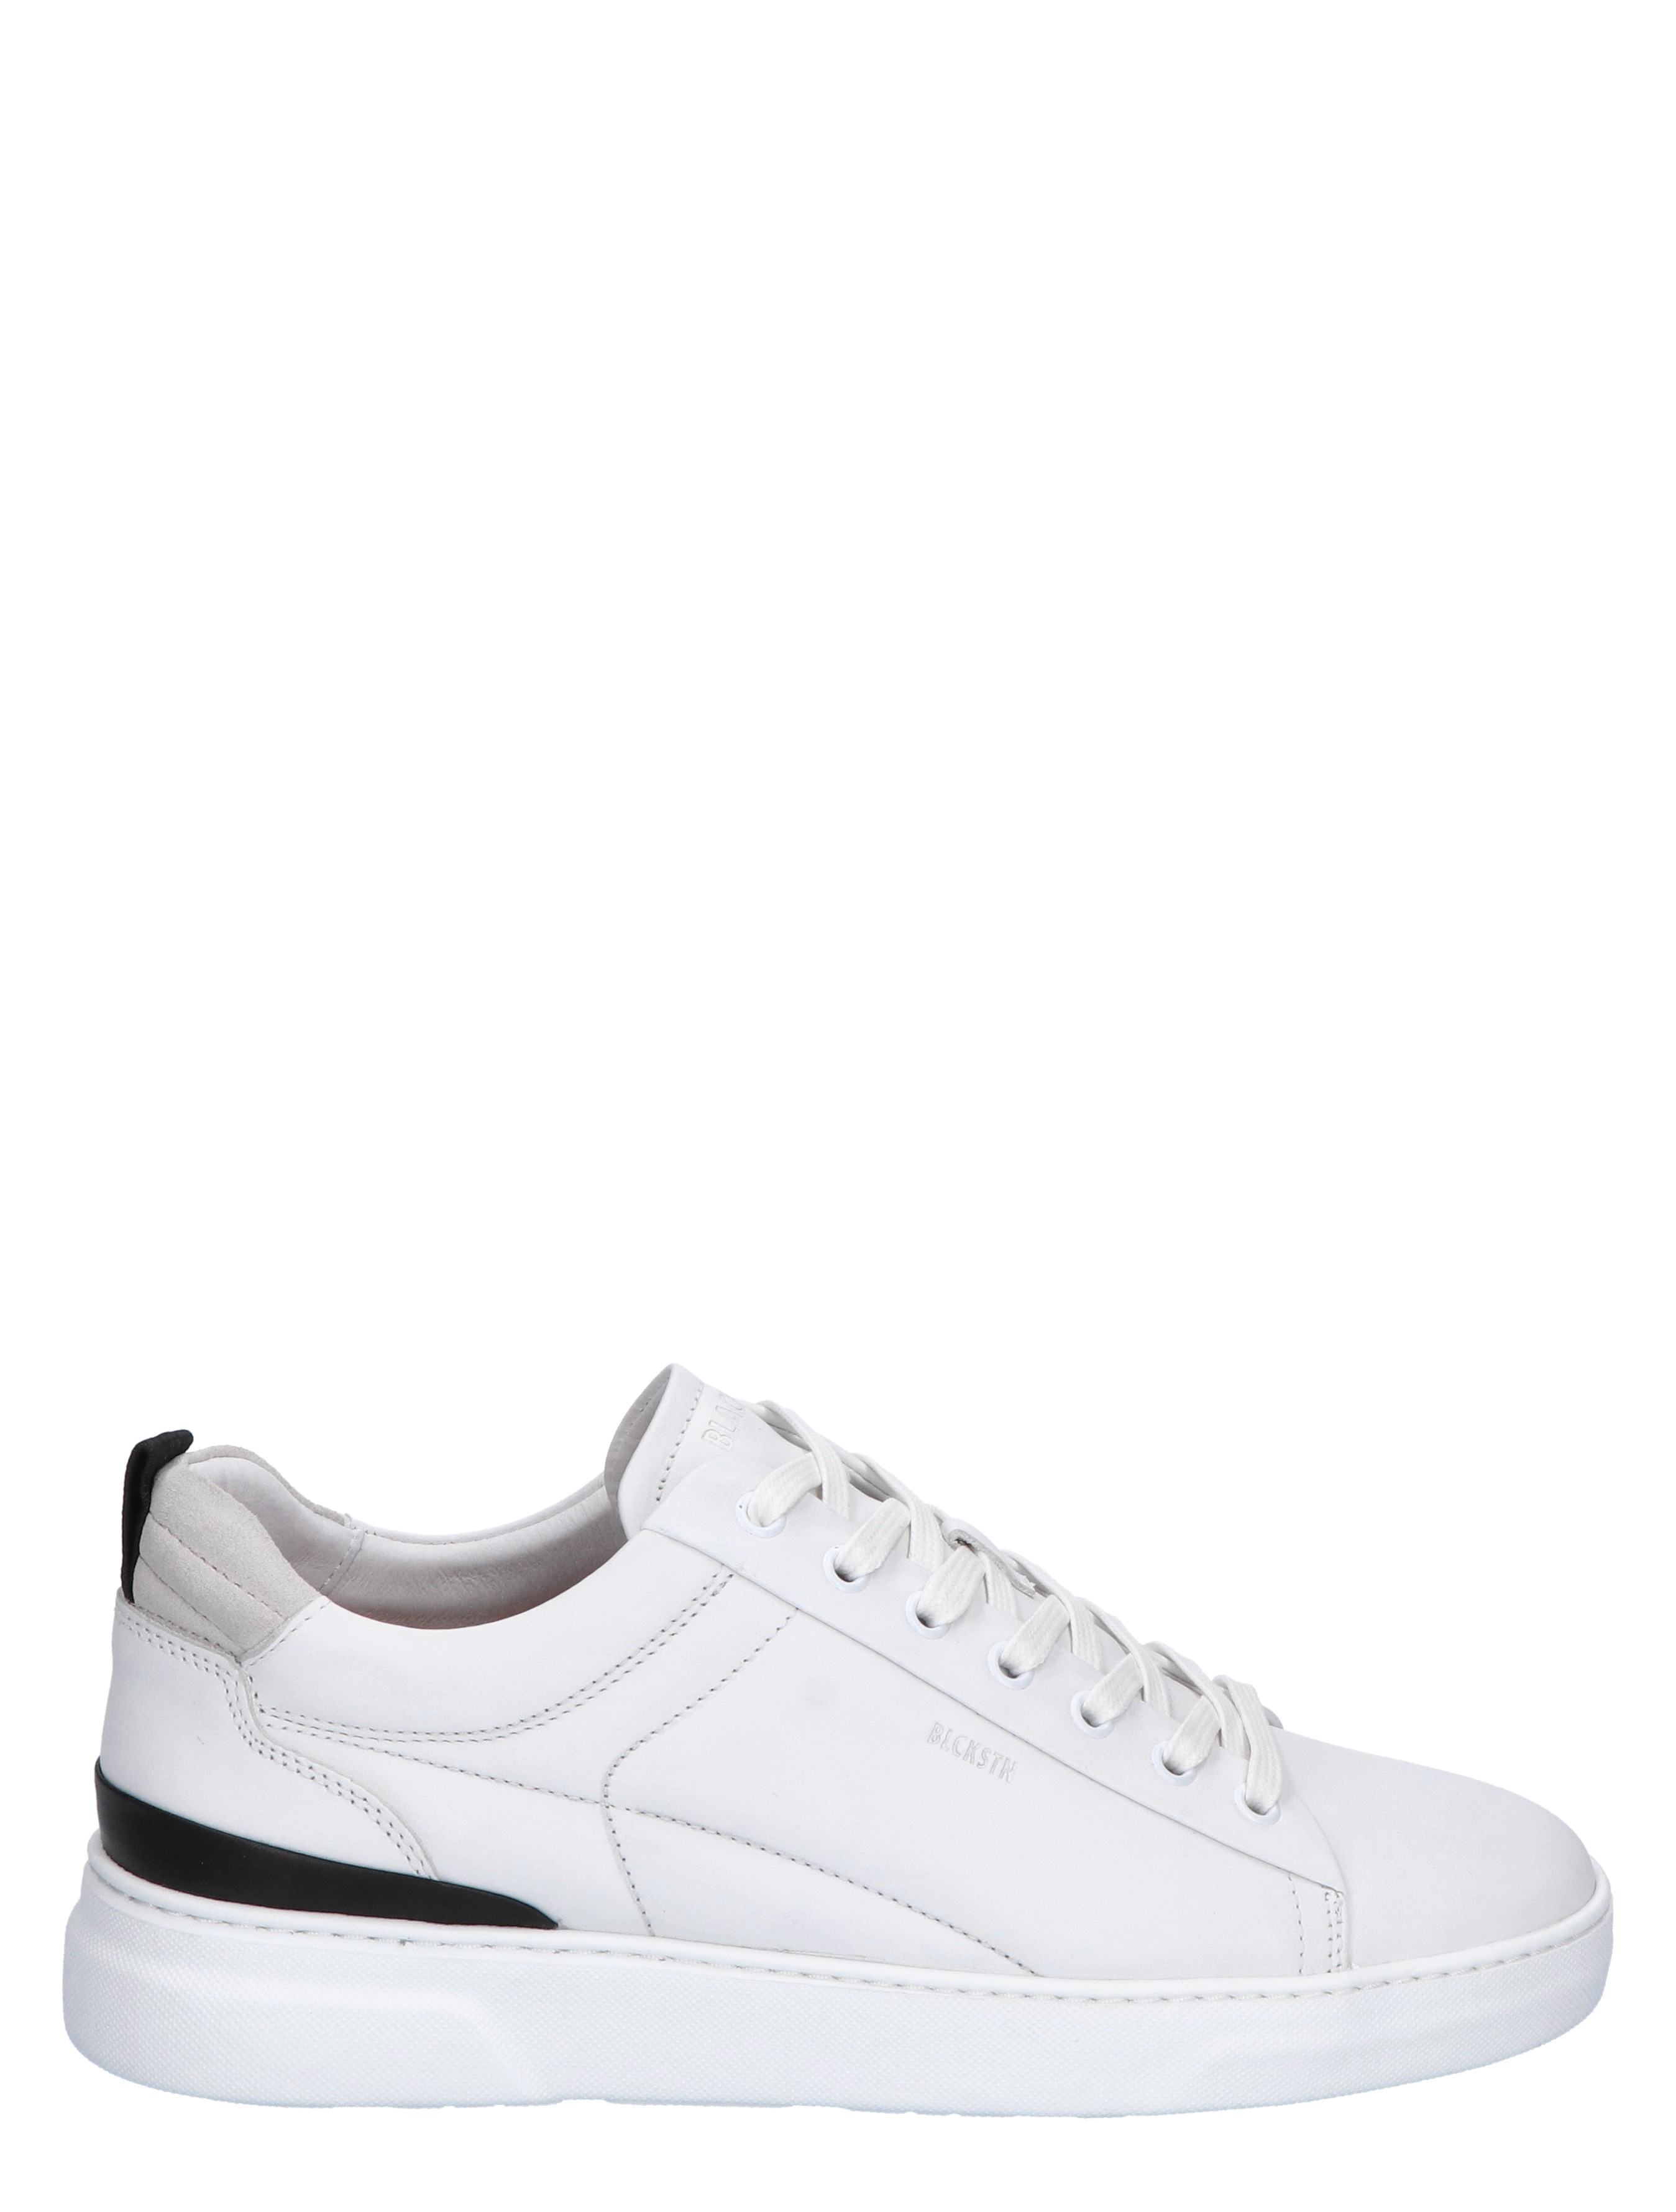 Blackstone BG357 White Sneakers